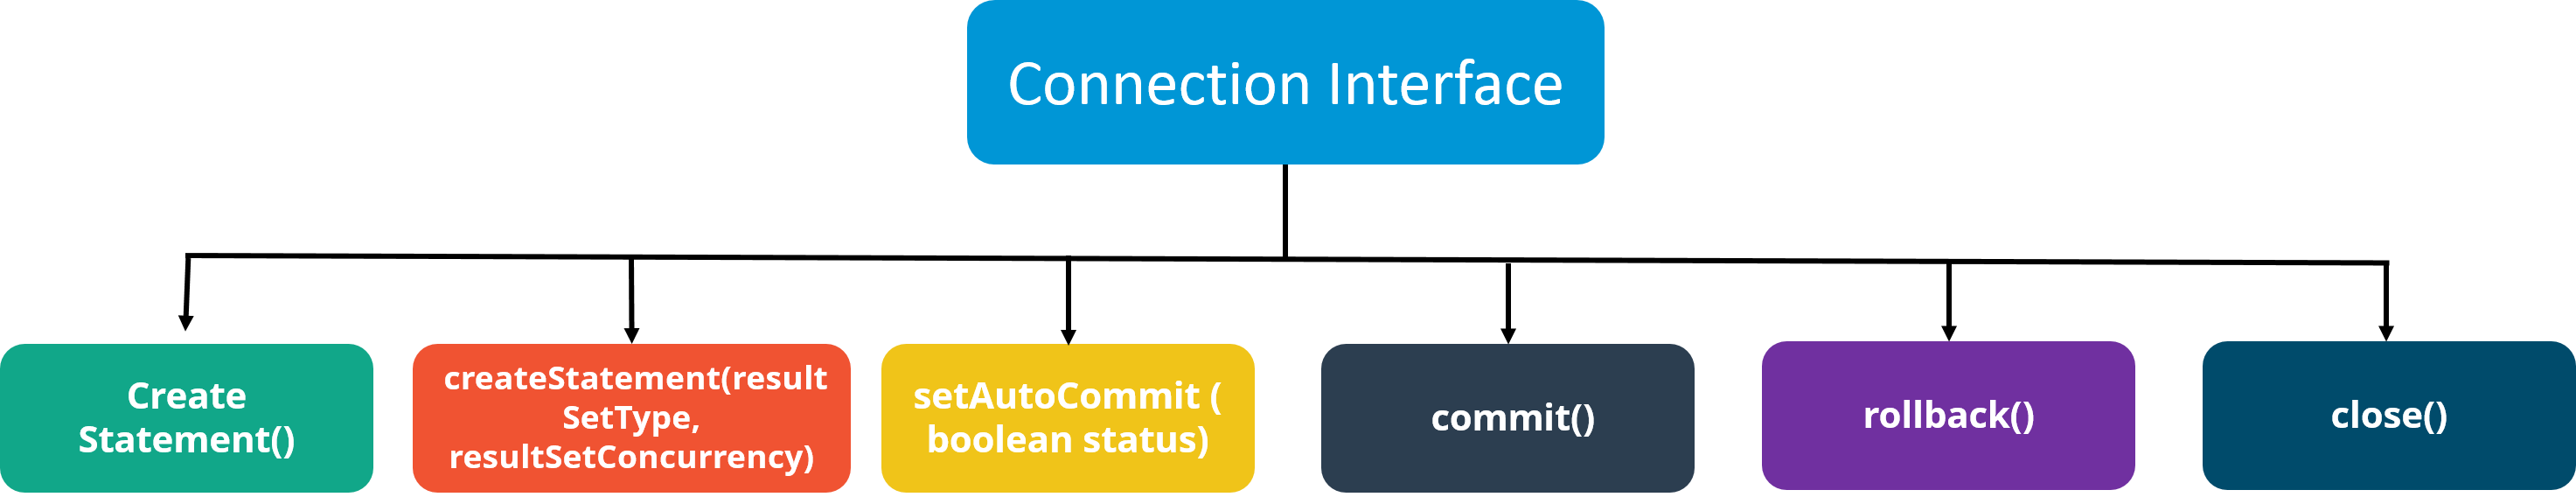 ConnectionInterface - Java Interview Questions - answerguruji